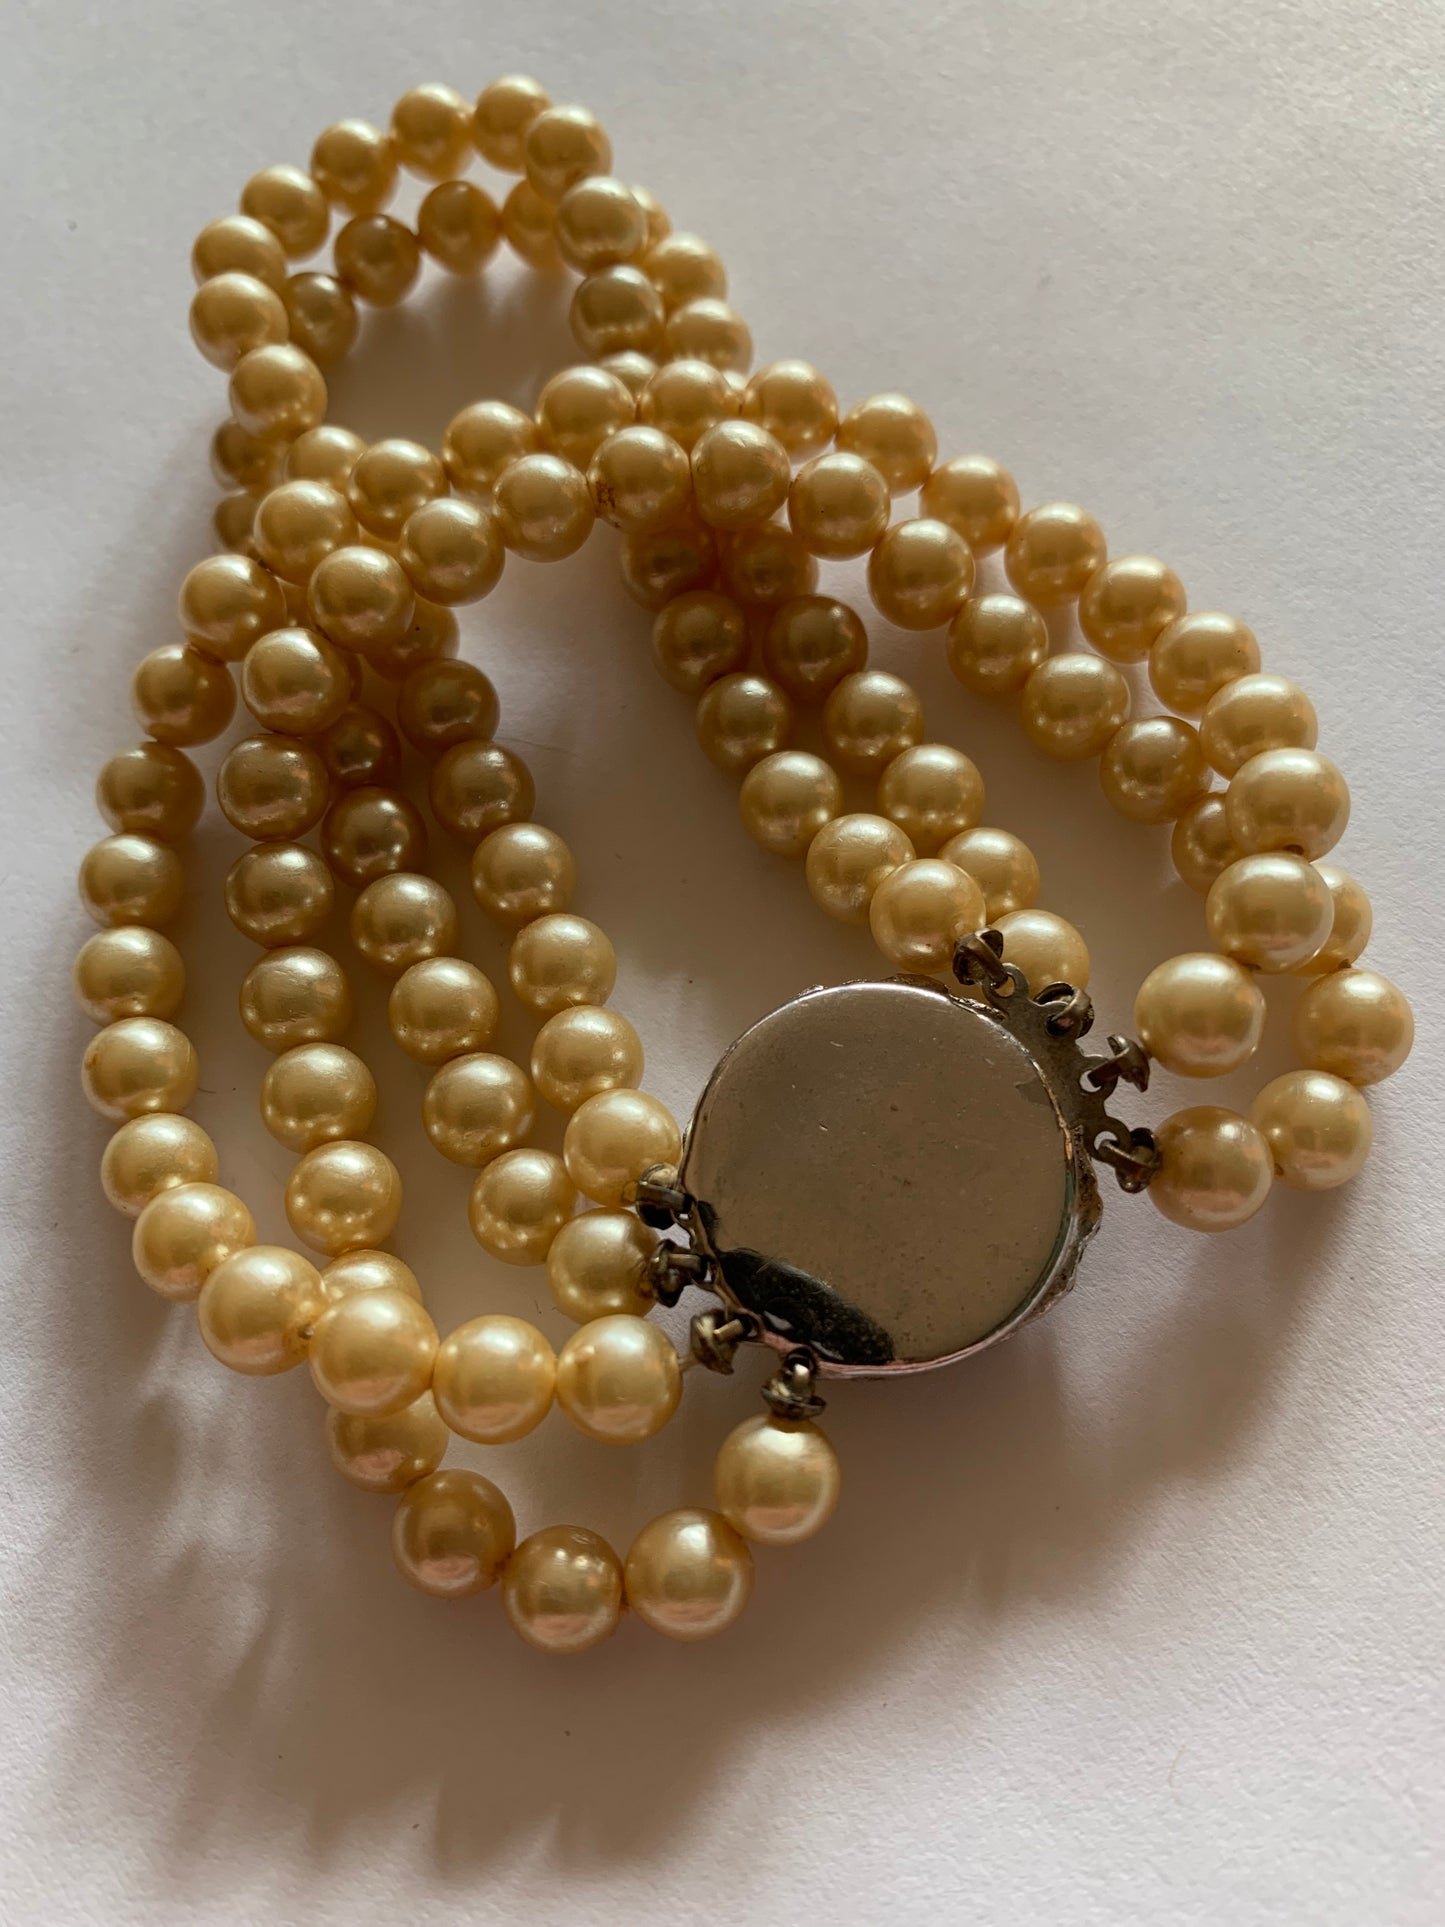 Luxe Quadruple Strand Faux Pearl Bracelet with Rhinestone Clasp circa 1930s